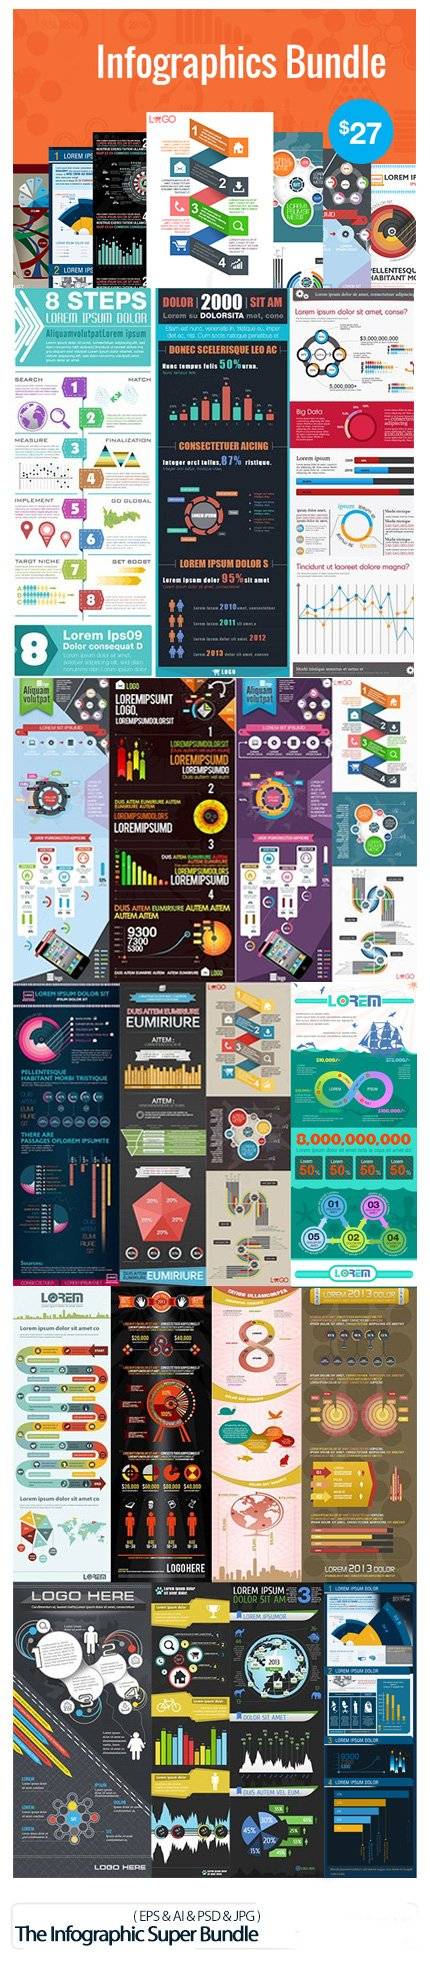 The Infographic Super Bundle